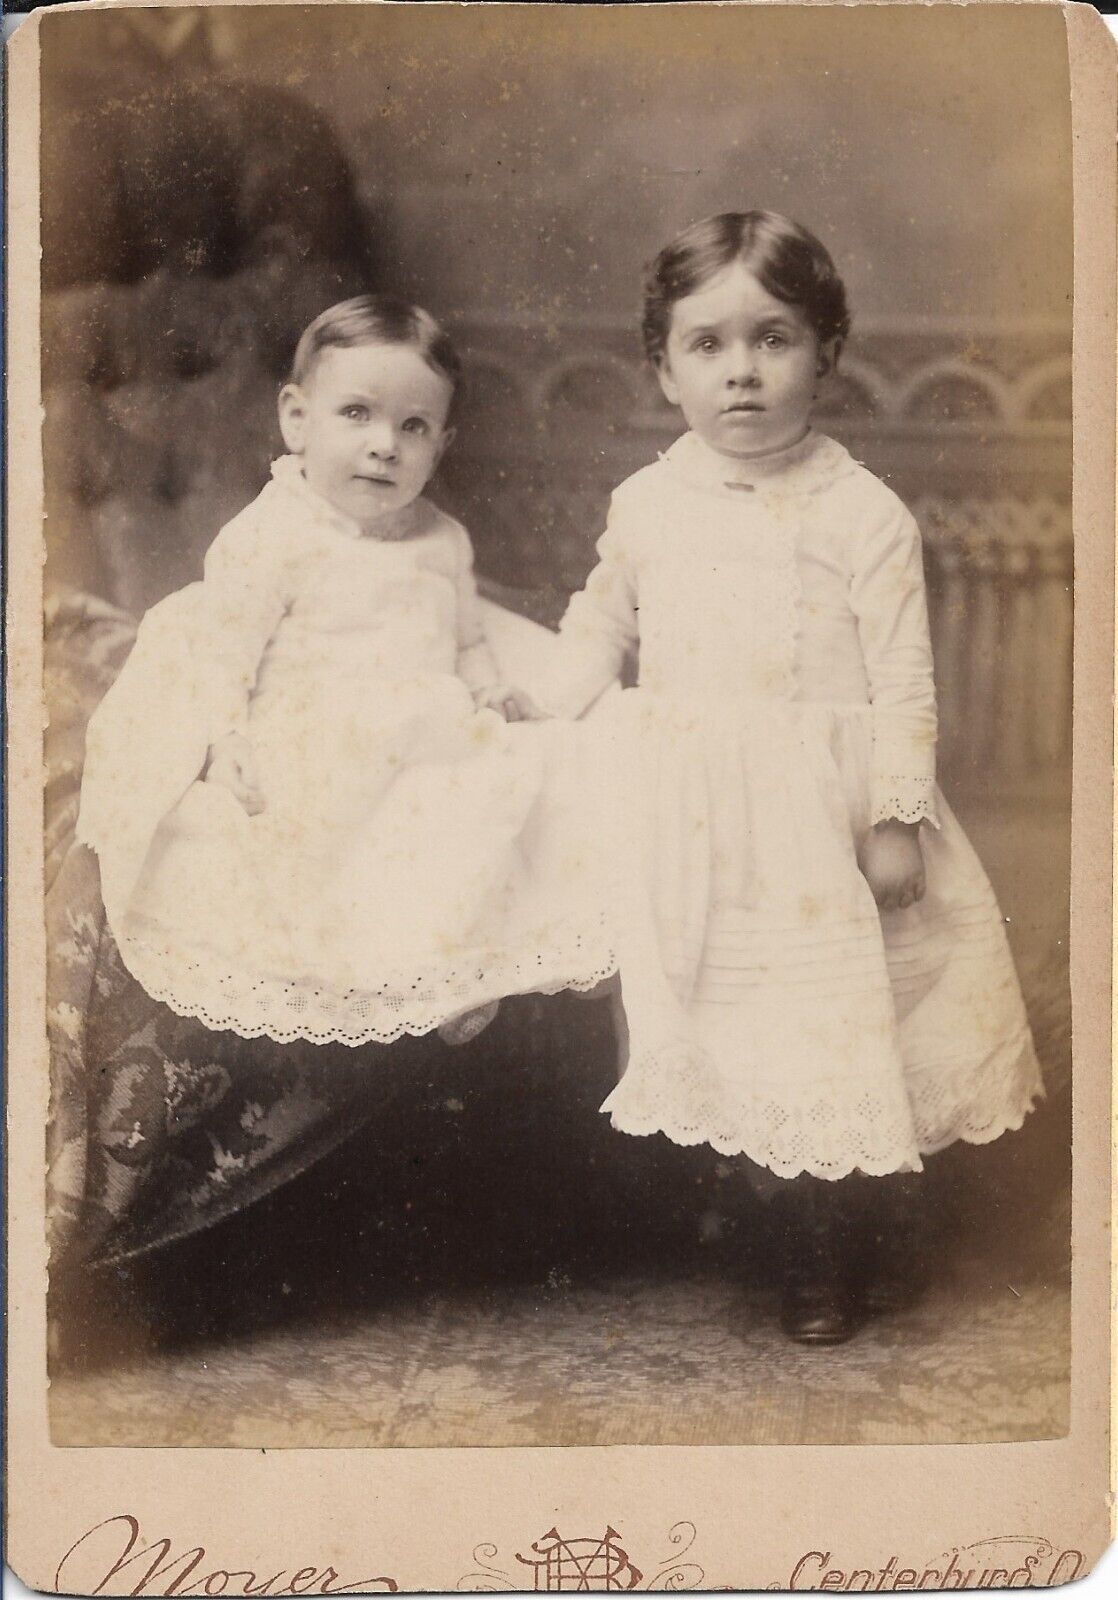 Two Children Photograph Pose Late 1800s Fashion Ohio Cabinet Card 4x6